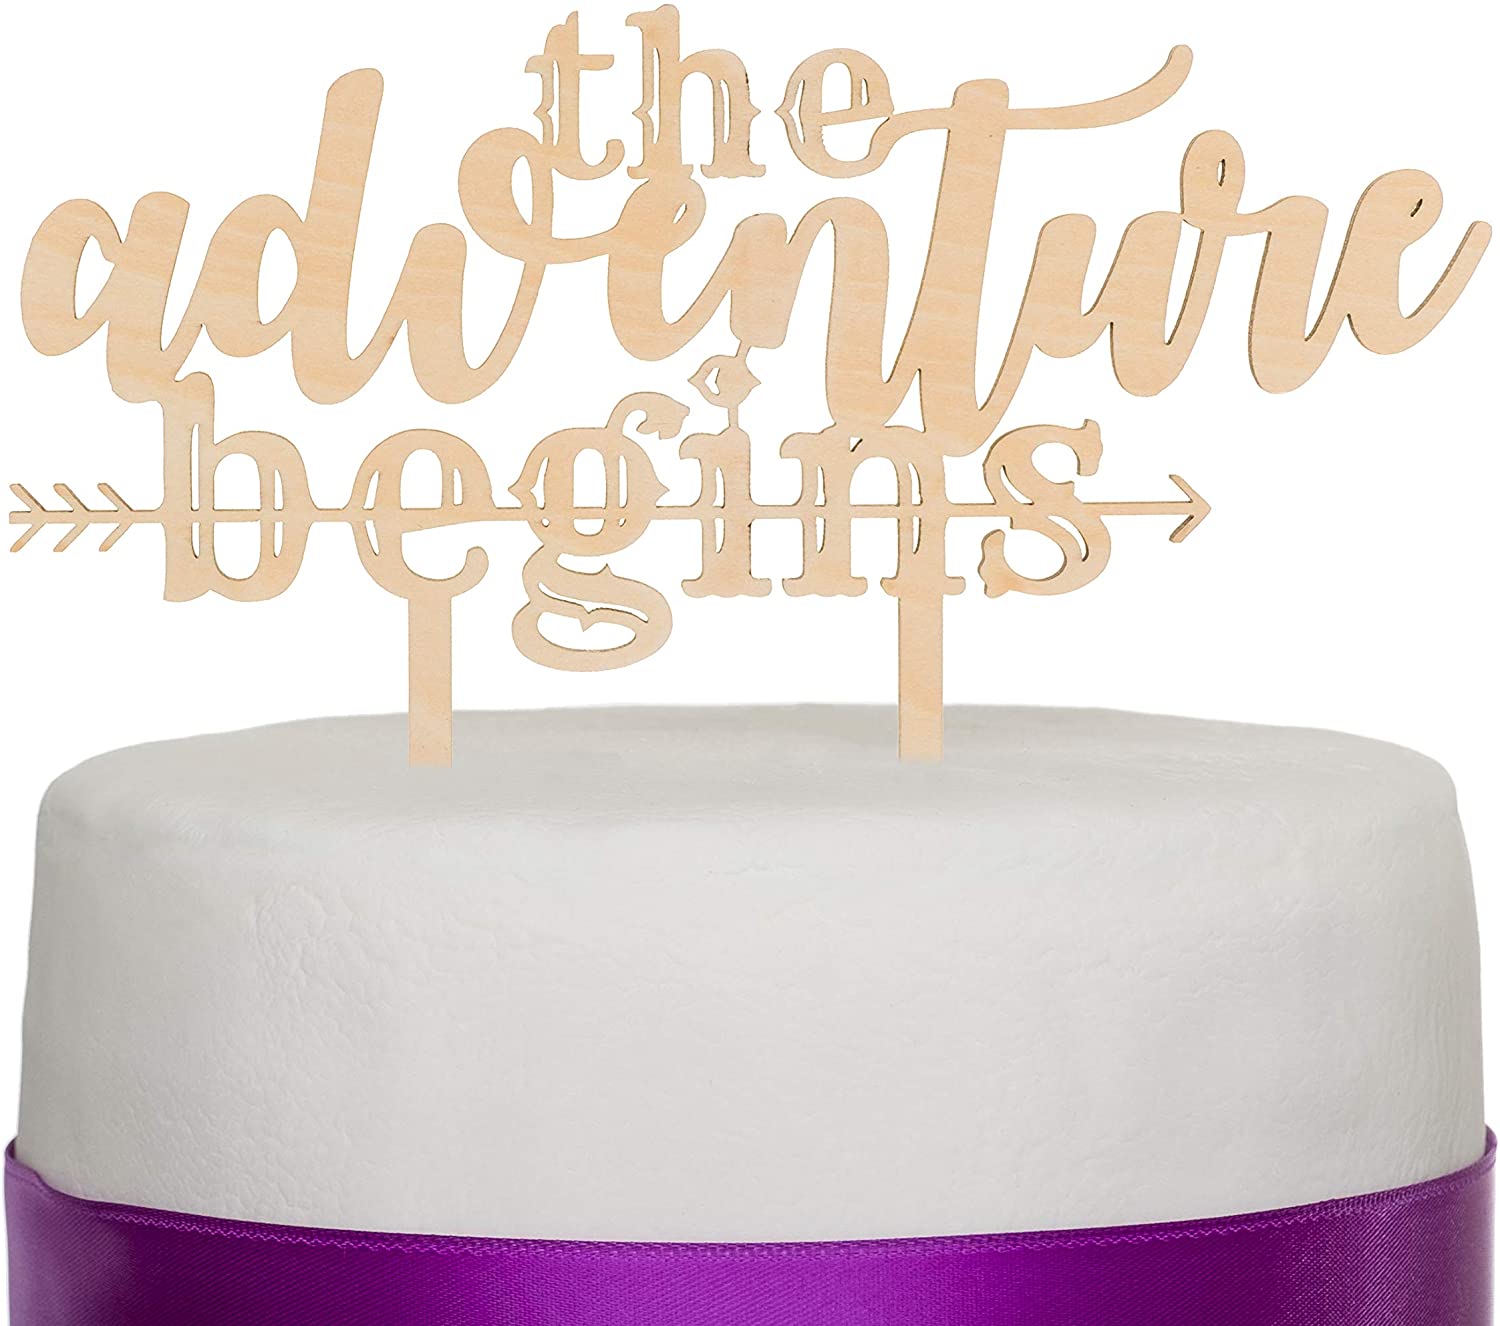 The Adventure Begins Wooden Wedding Cake Topper